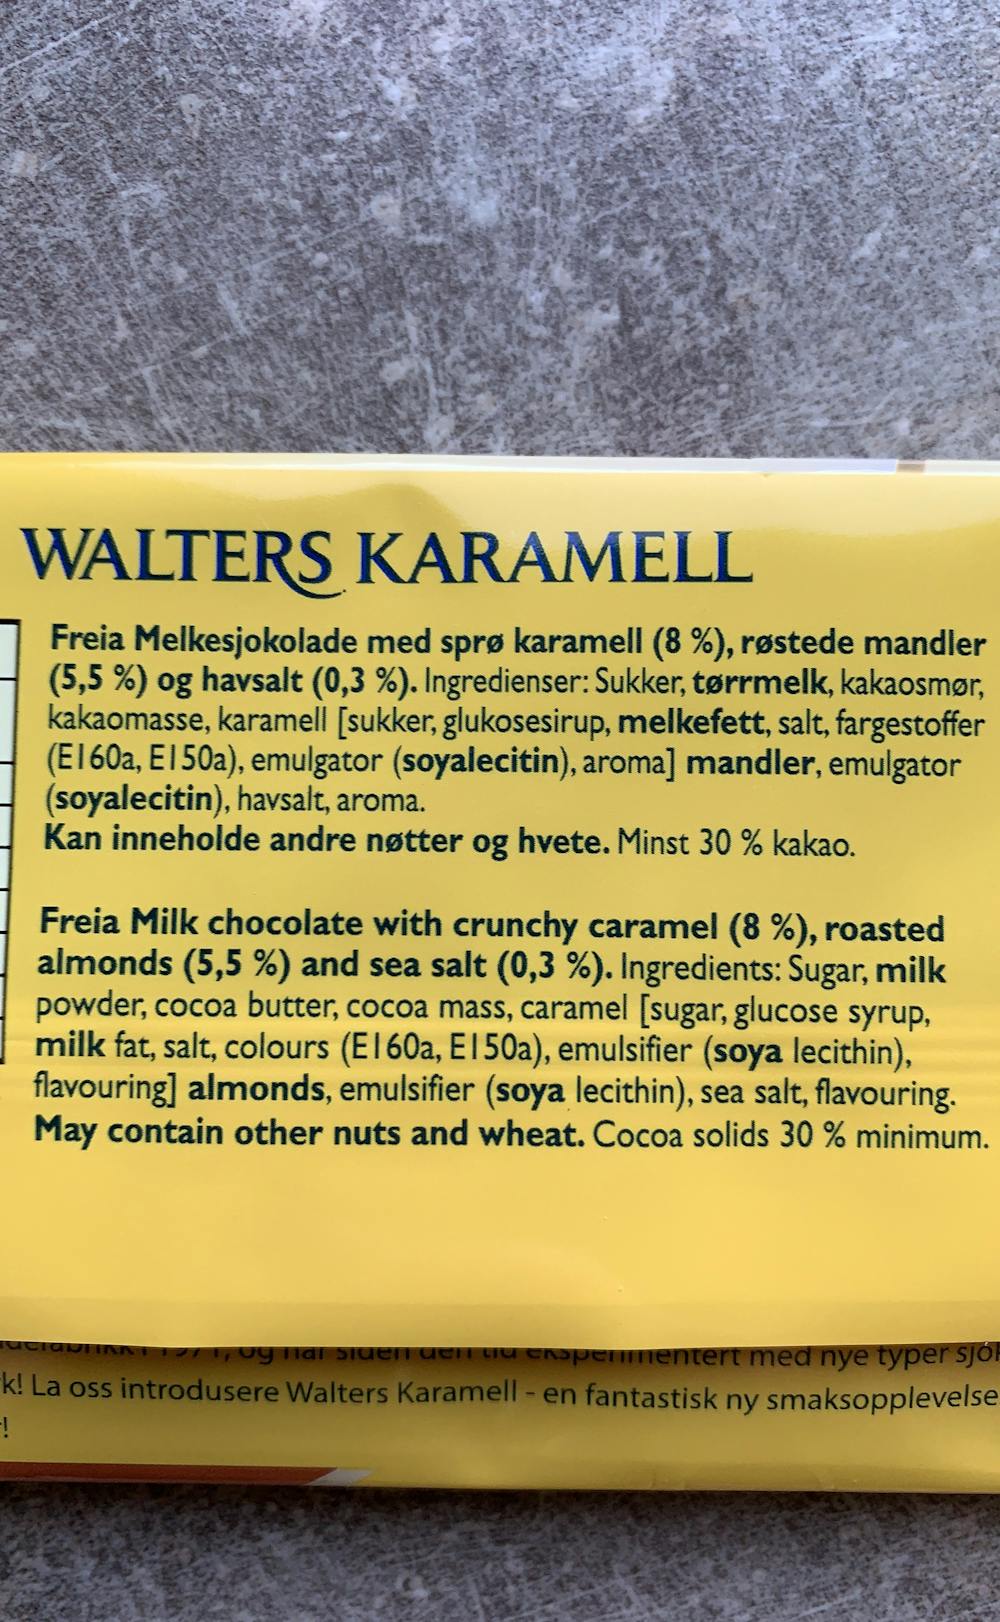 Ingrediensliste - Walters karamel melkesjokolade, Freia